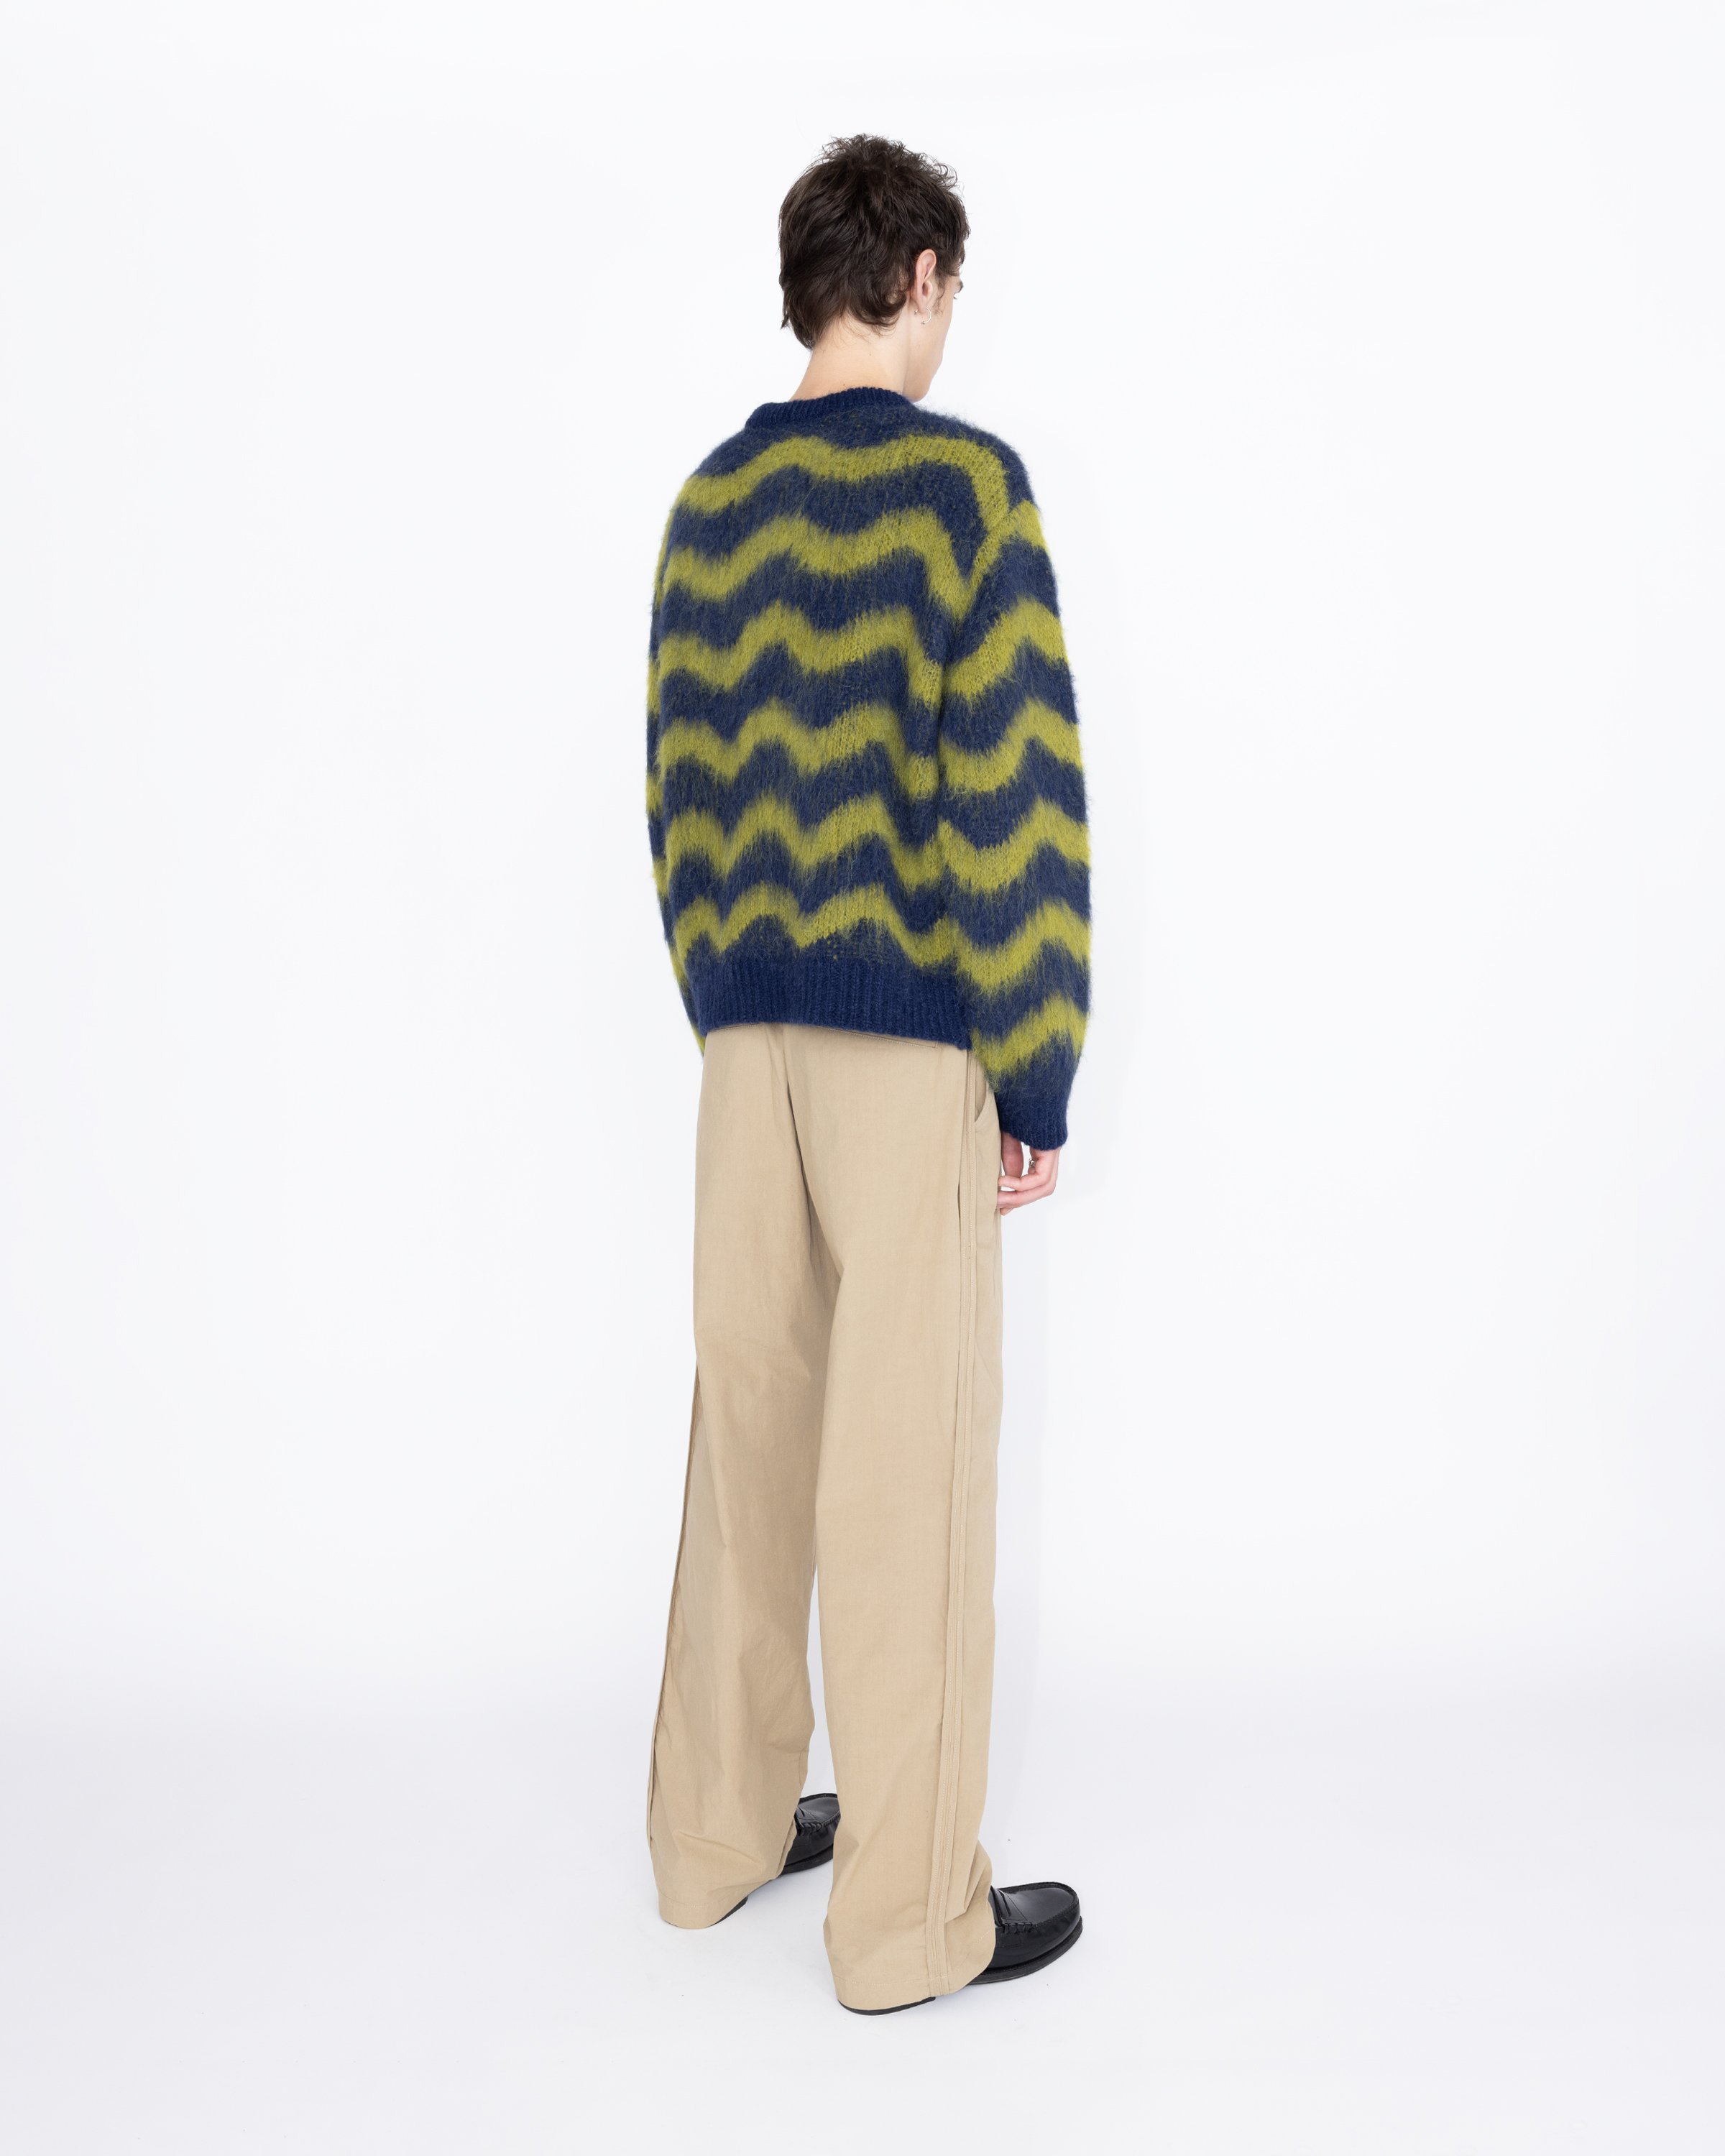 Highsnobiety HS05 - Alpaca Fuzzy Wave Sweater Navy/Olive green - Clothing - Multi - Image 5